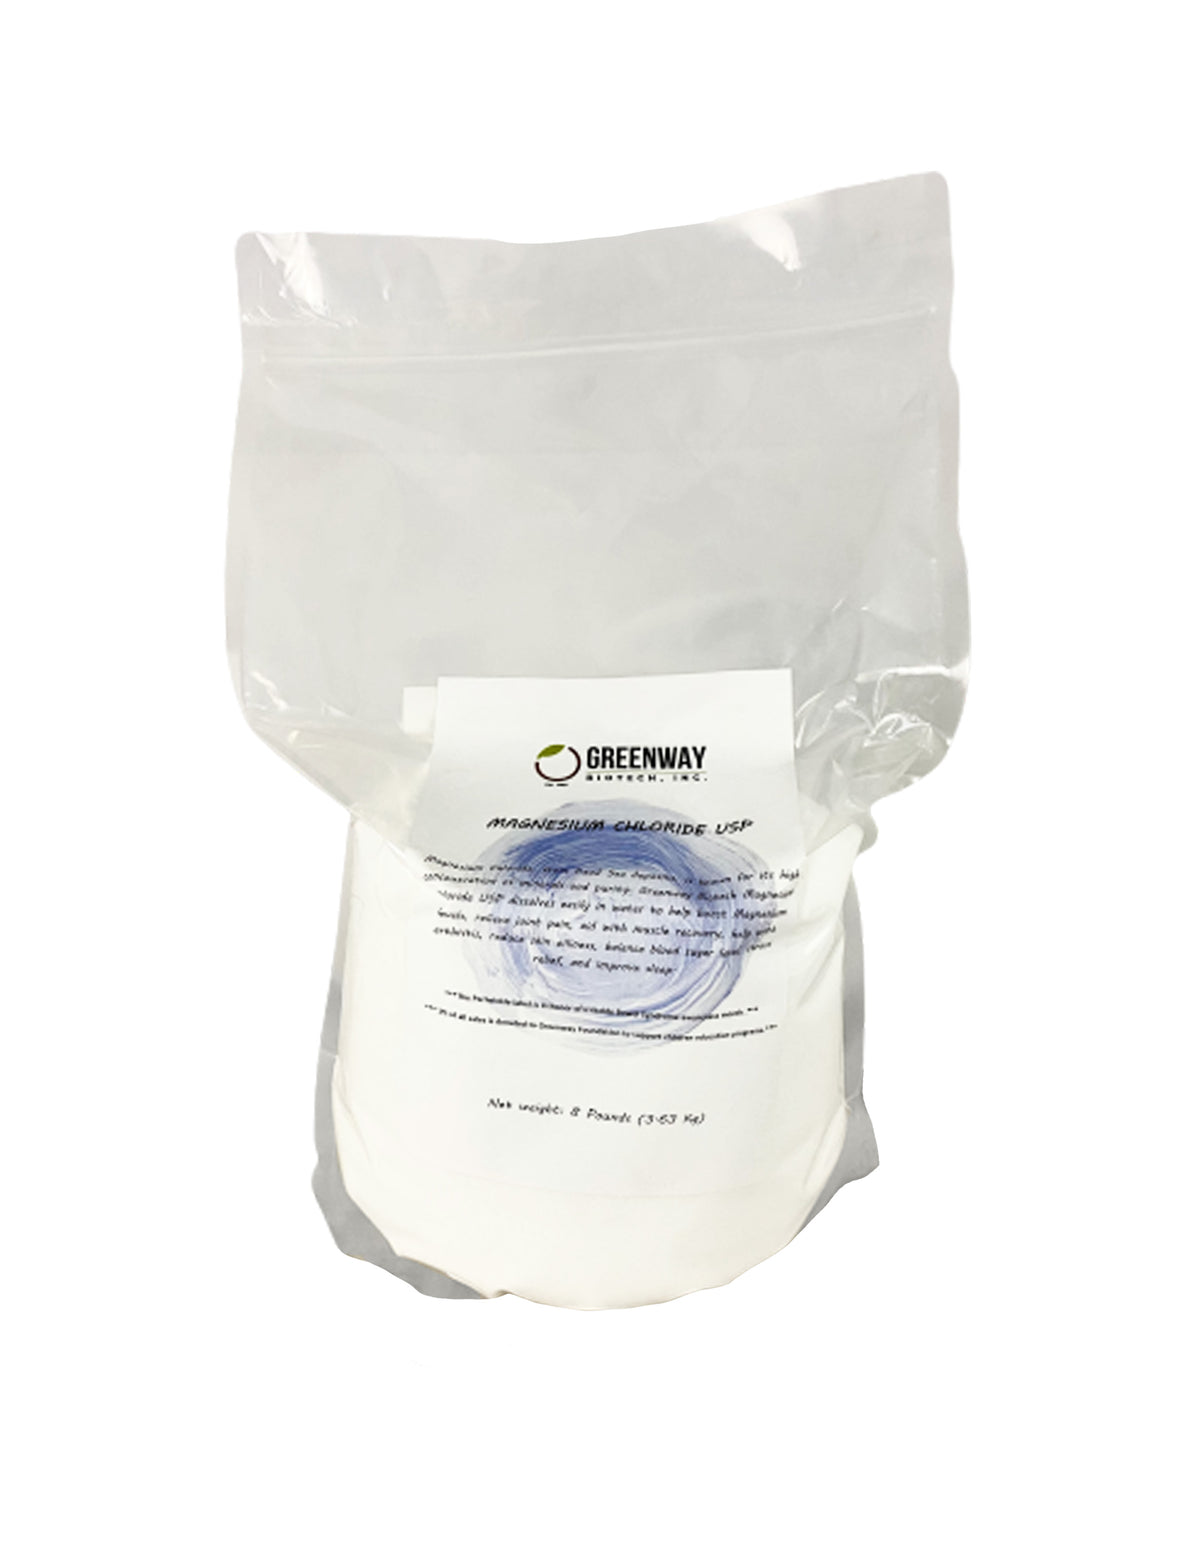 Magnesium Chloride USP - 100% Edible